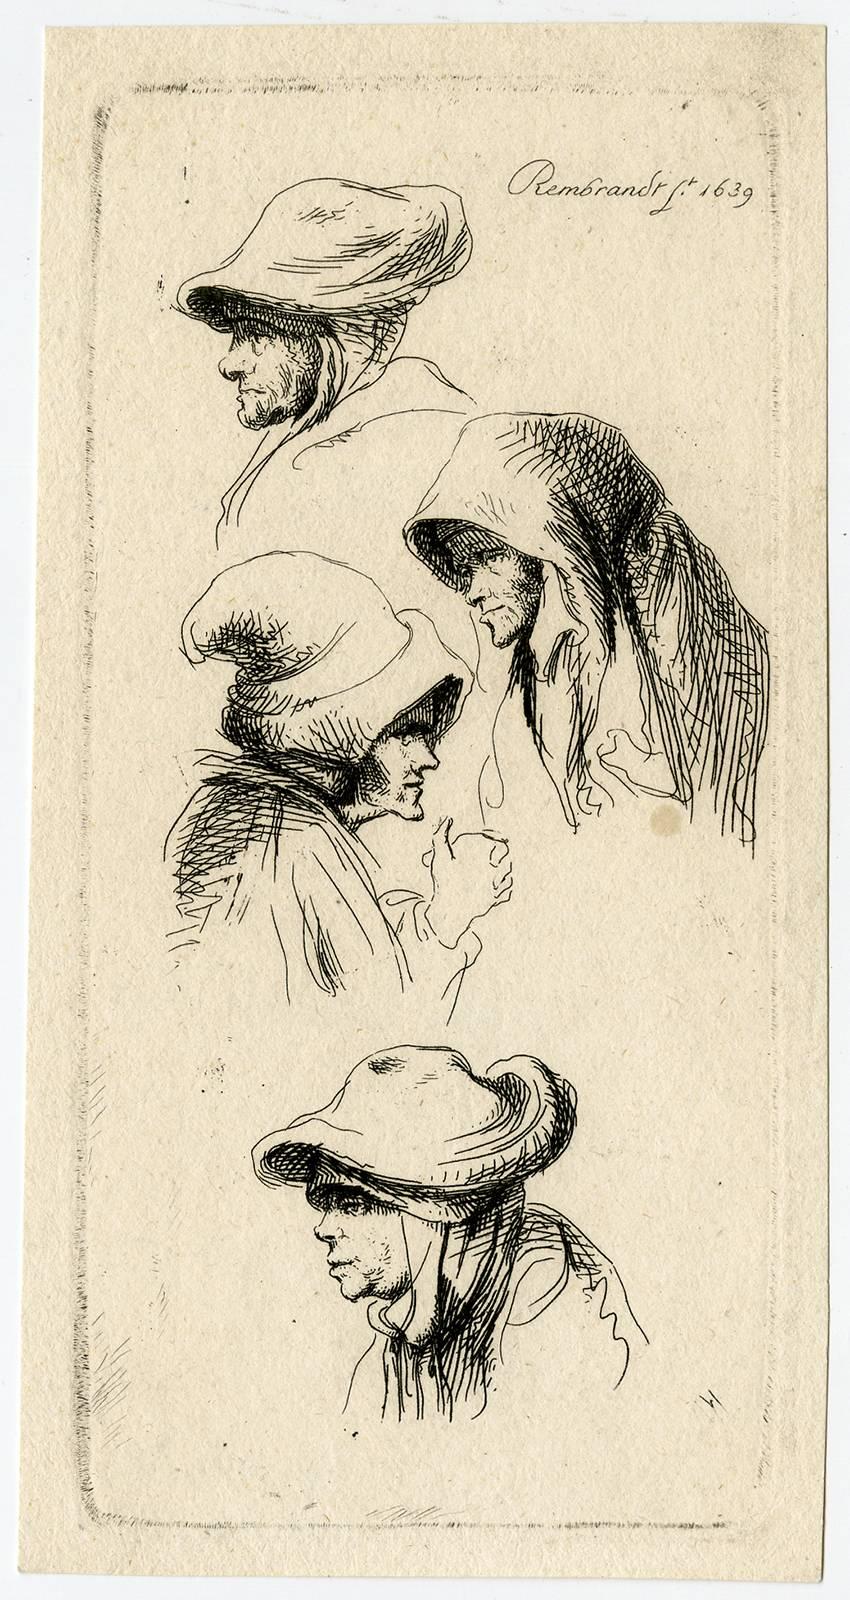 Ignace Joseph de Claussin Portrait Print - Untitled - Studies of heads, all wearing headdresses.